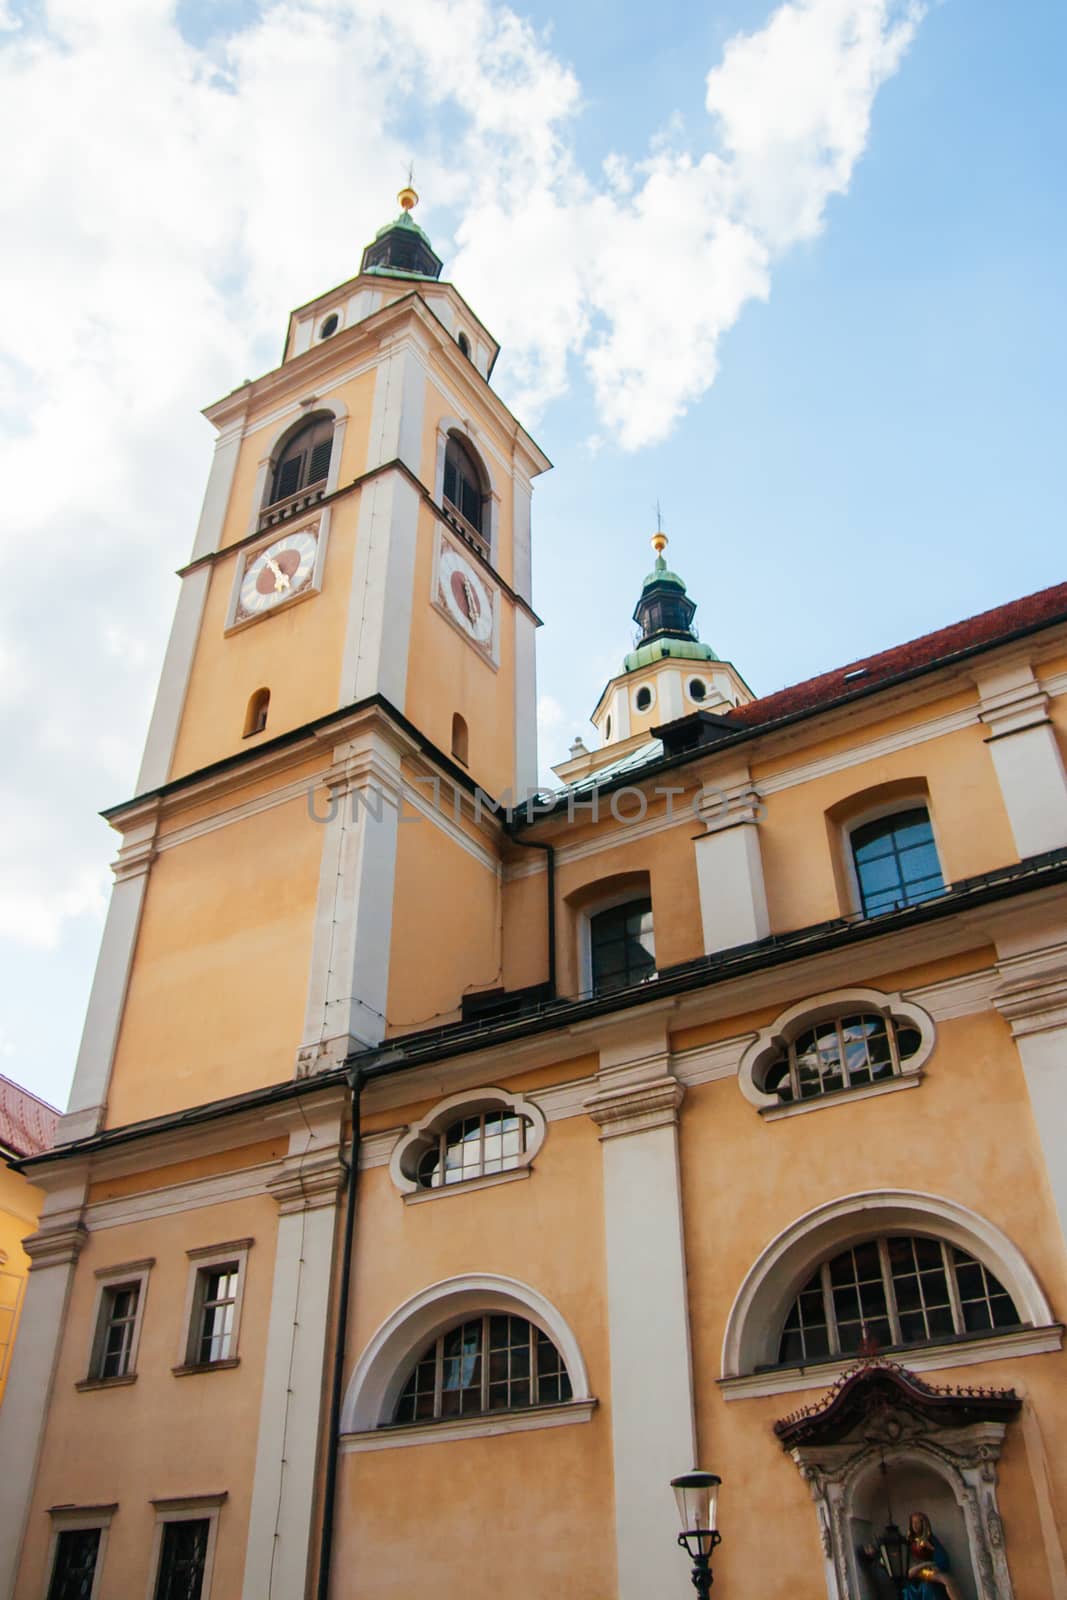 St. Nicholas's Church in Slovenia by FiledIMAGE